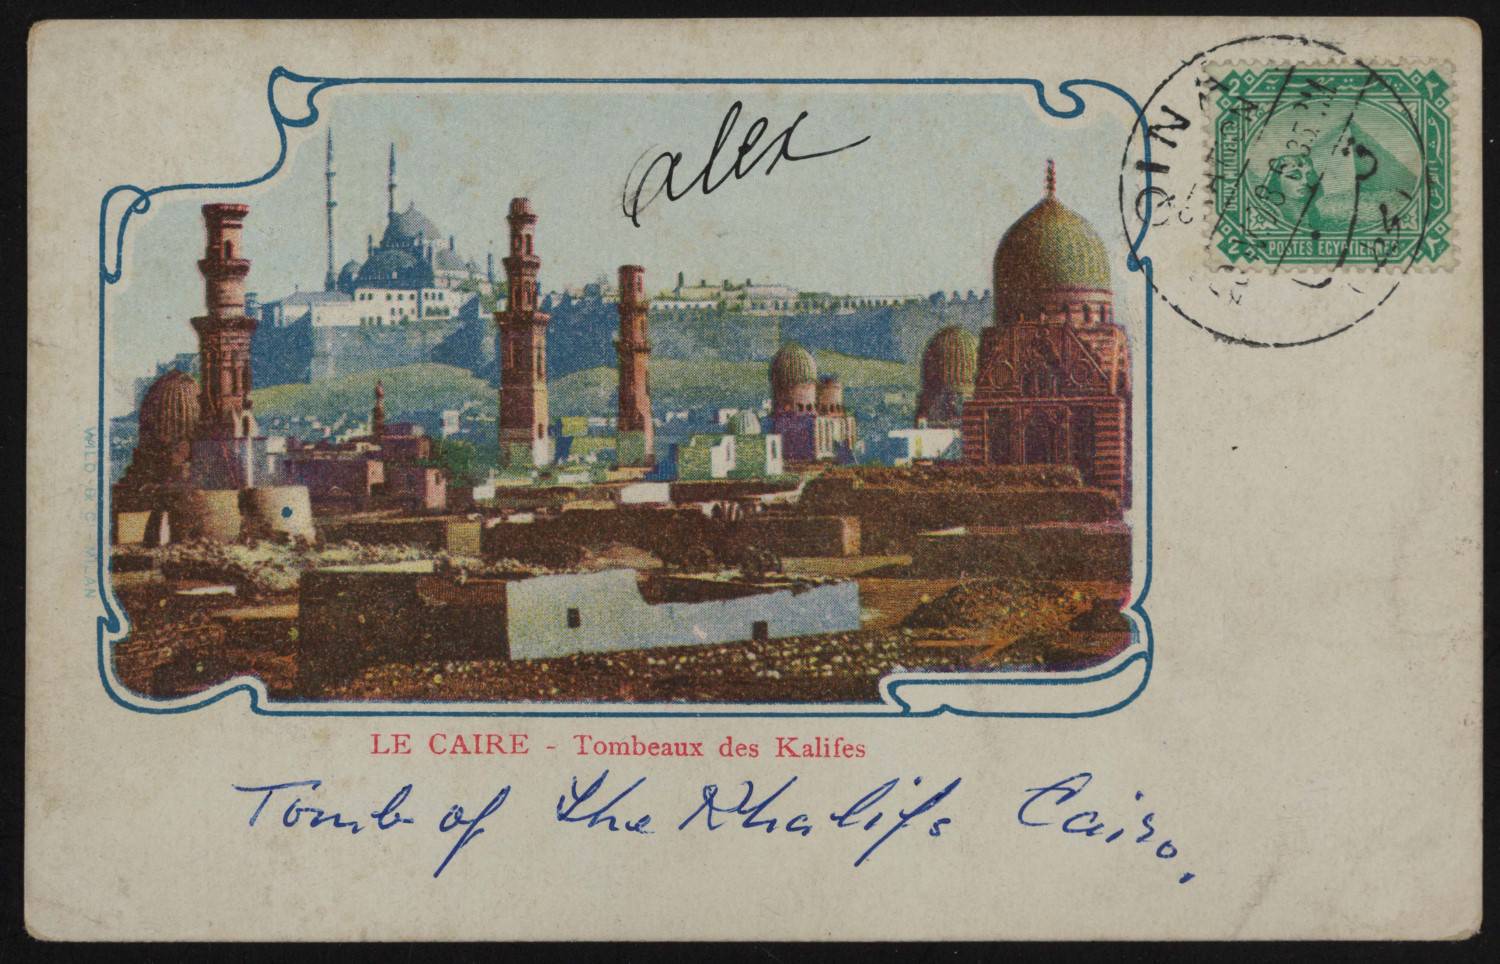 Postcard of tomb of Khalifs Cairo